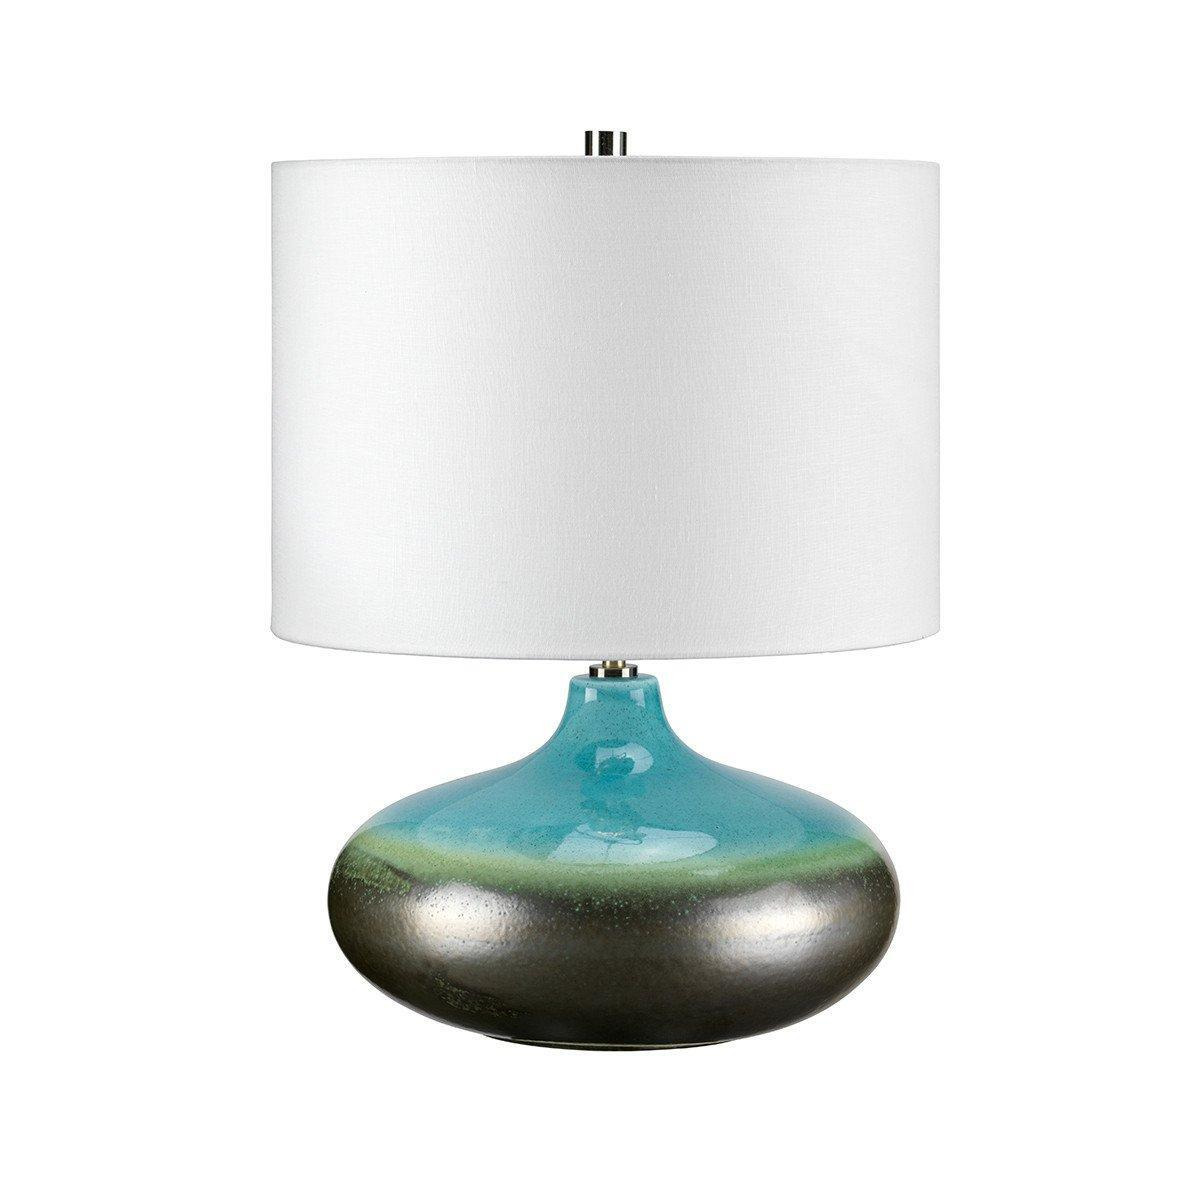 Laguna 1 Light Small Table Lamp Graphite Turquoise E27 - image 1